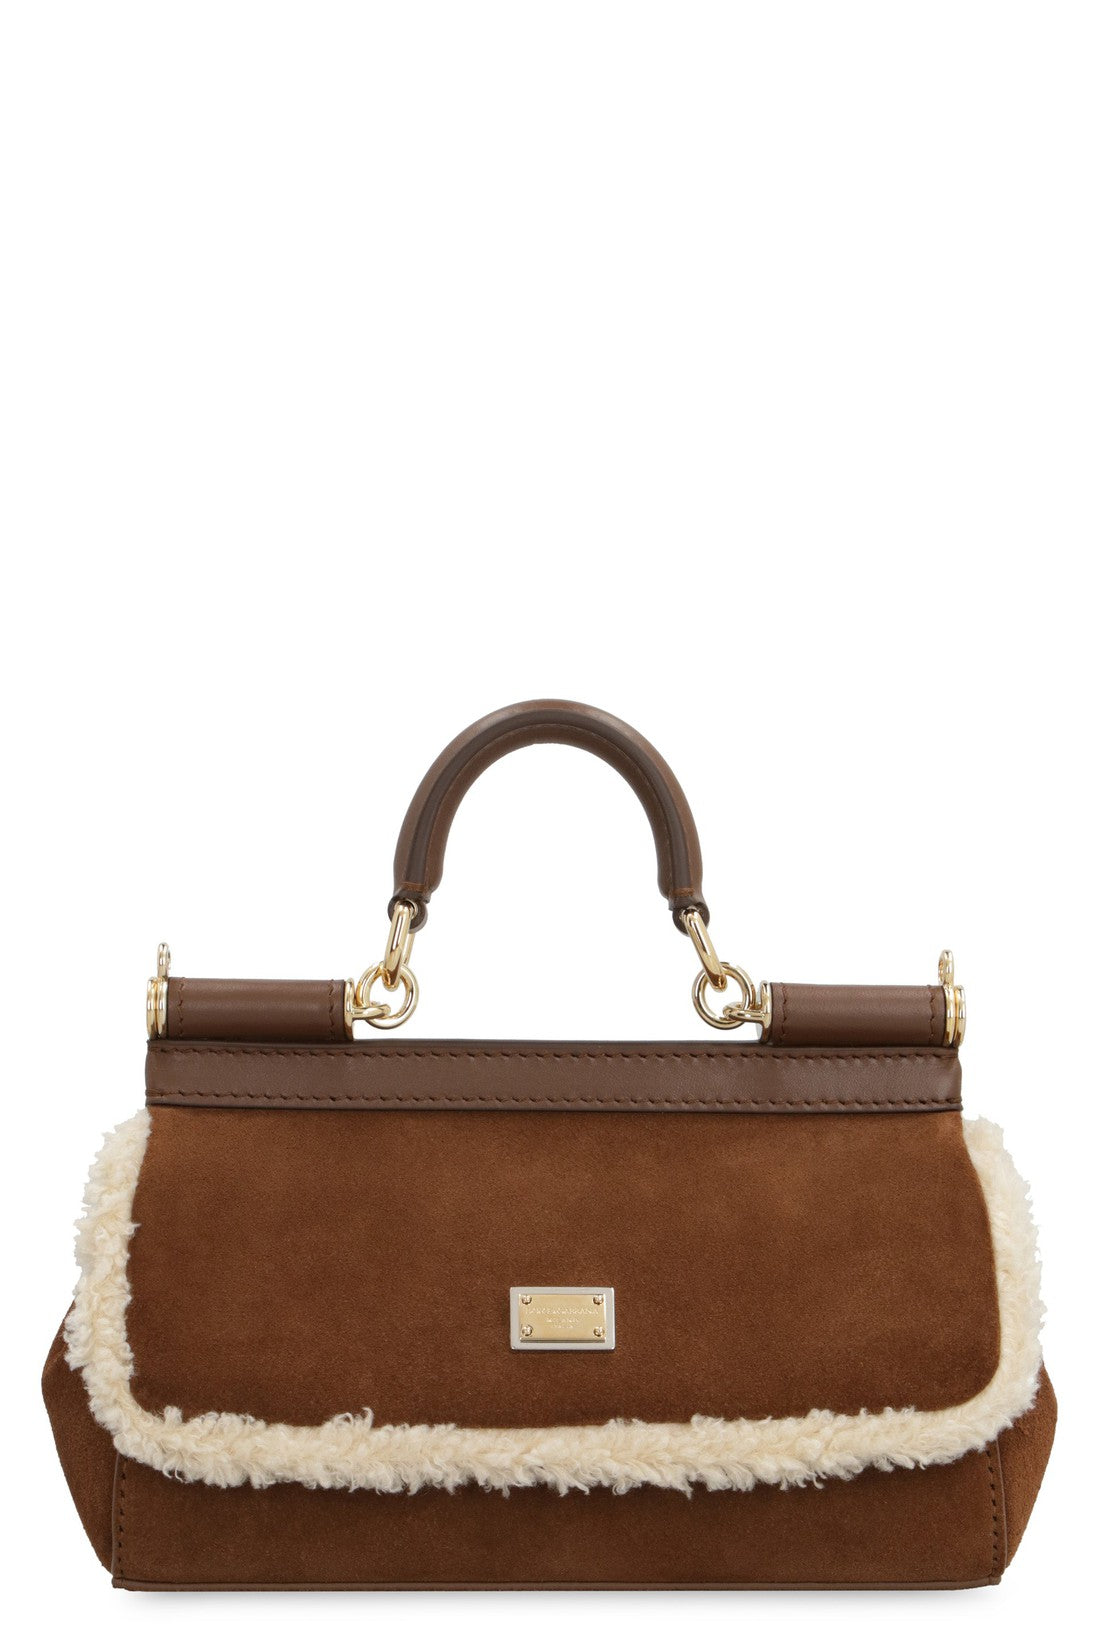 Dolce & Gabbana-OUTLET-SALE-Sicily suede handbag-ARCHIVIST